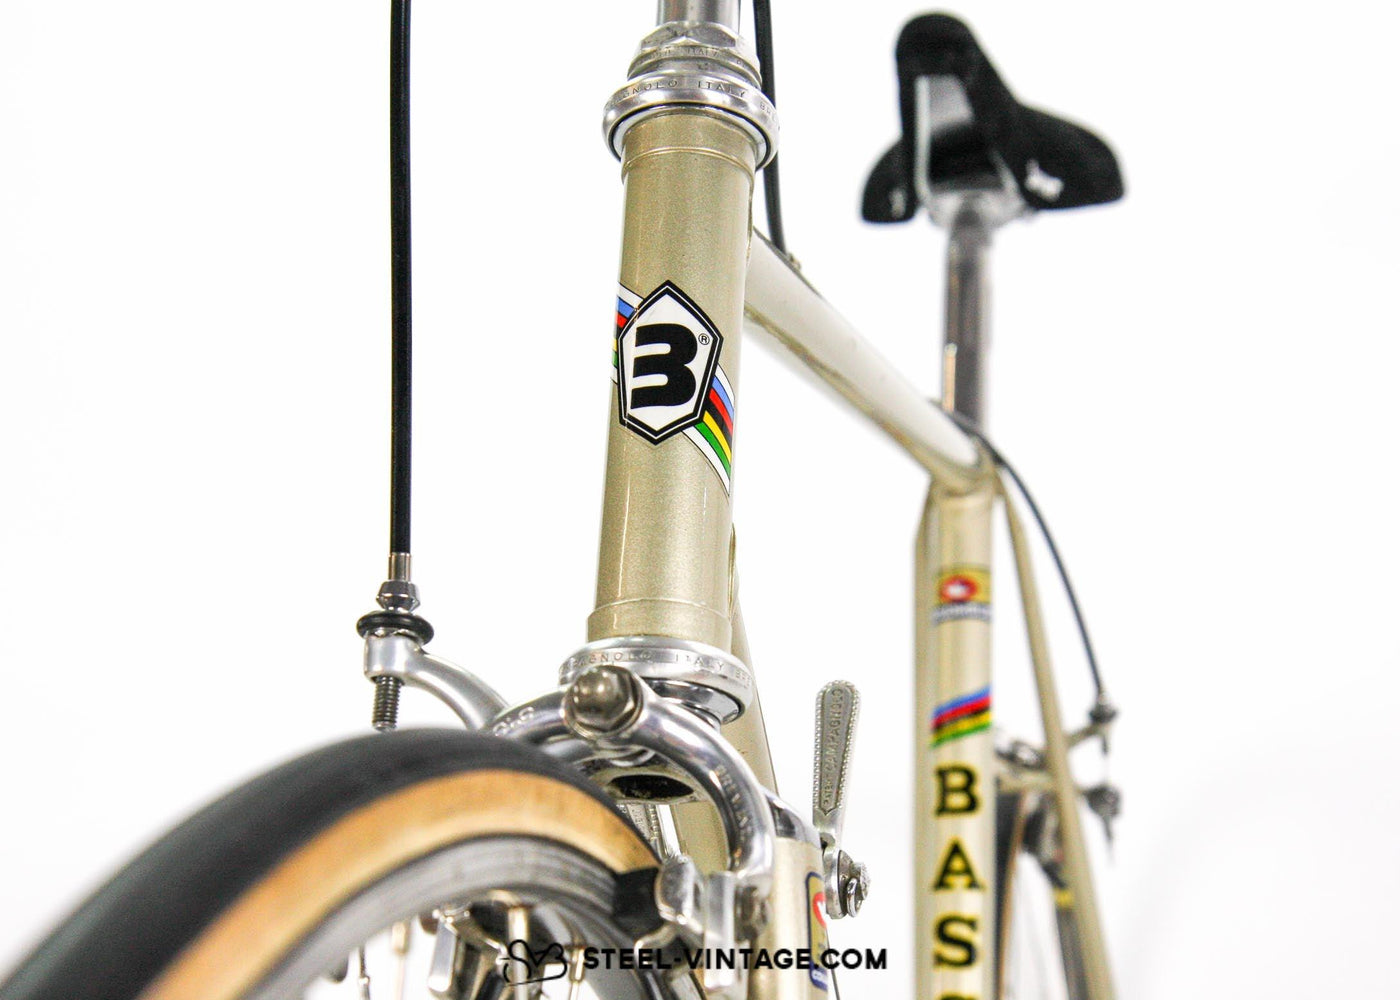 Basso Gap Classic Road Bike 1982 - Steel Vintage Bikes